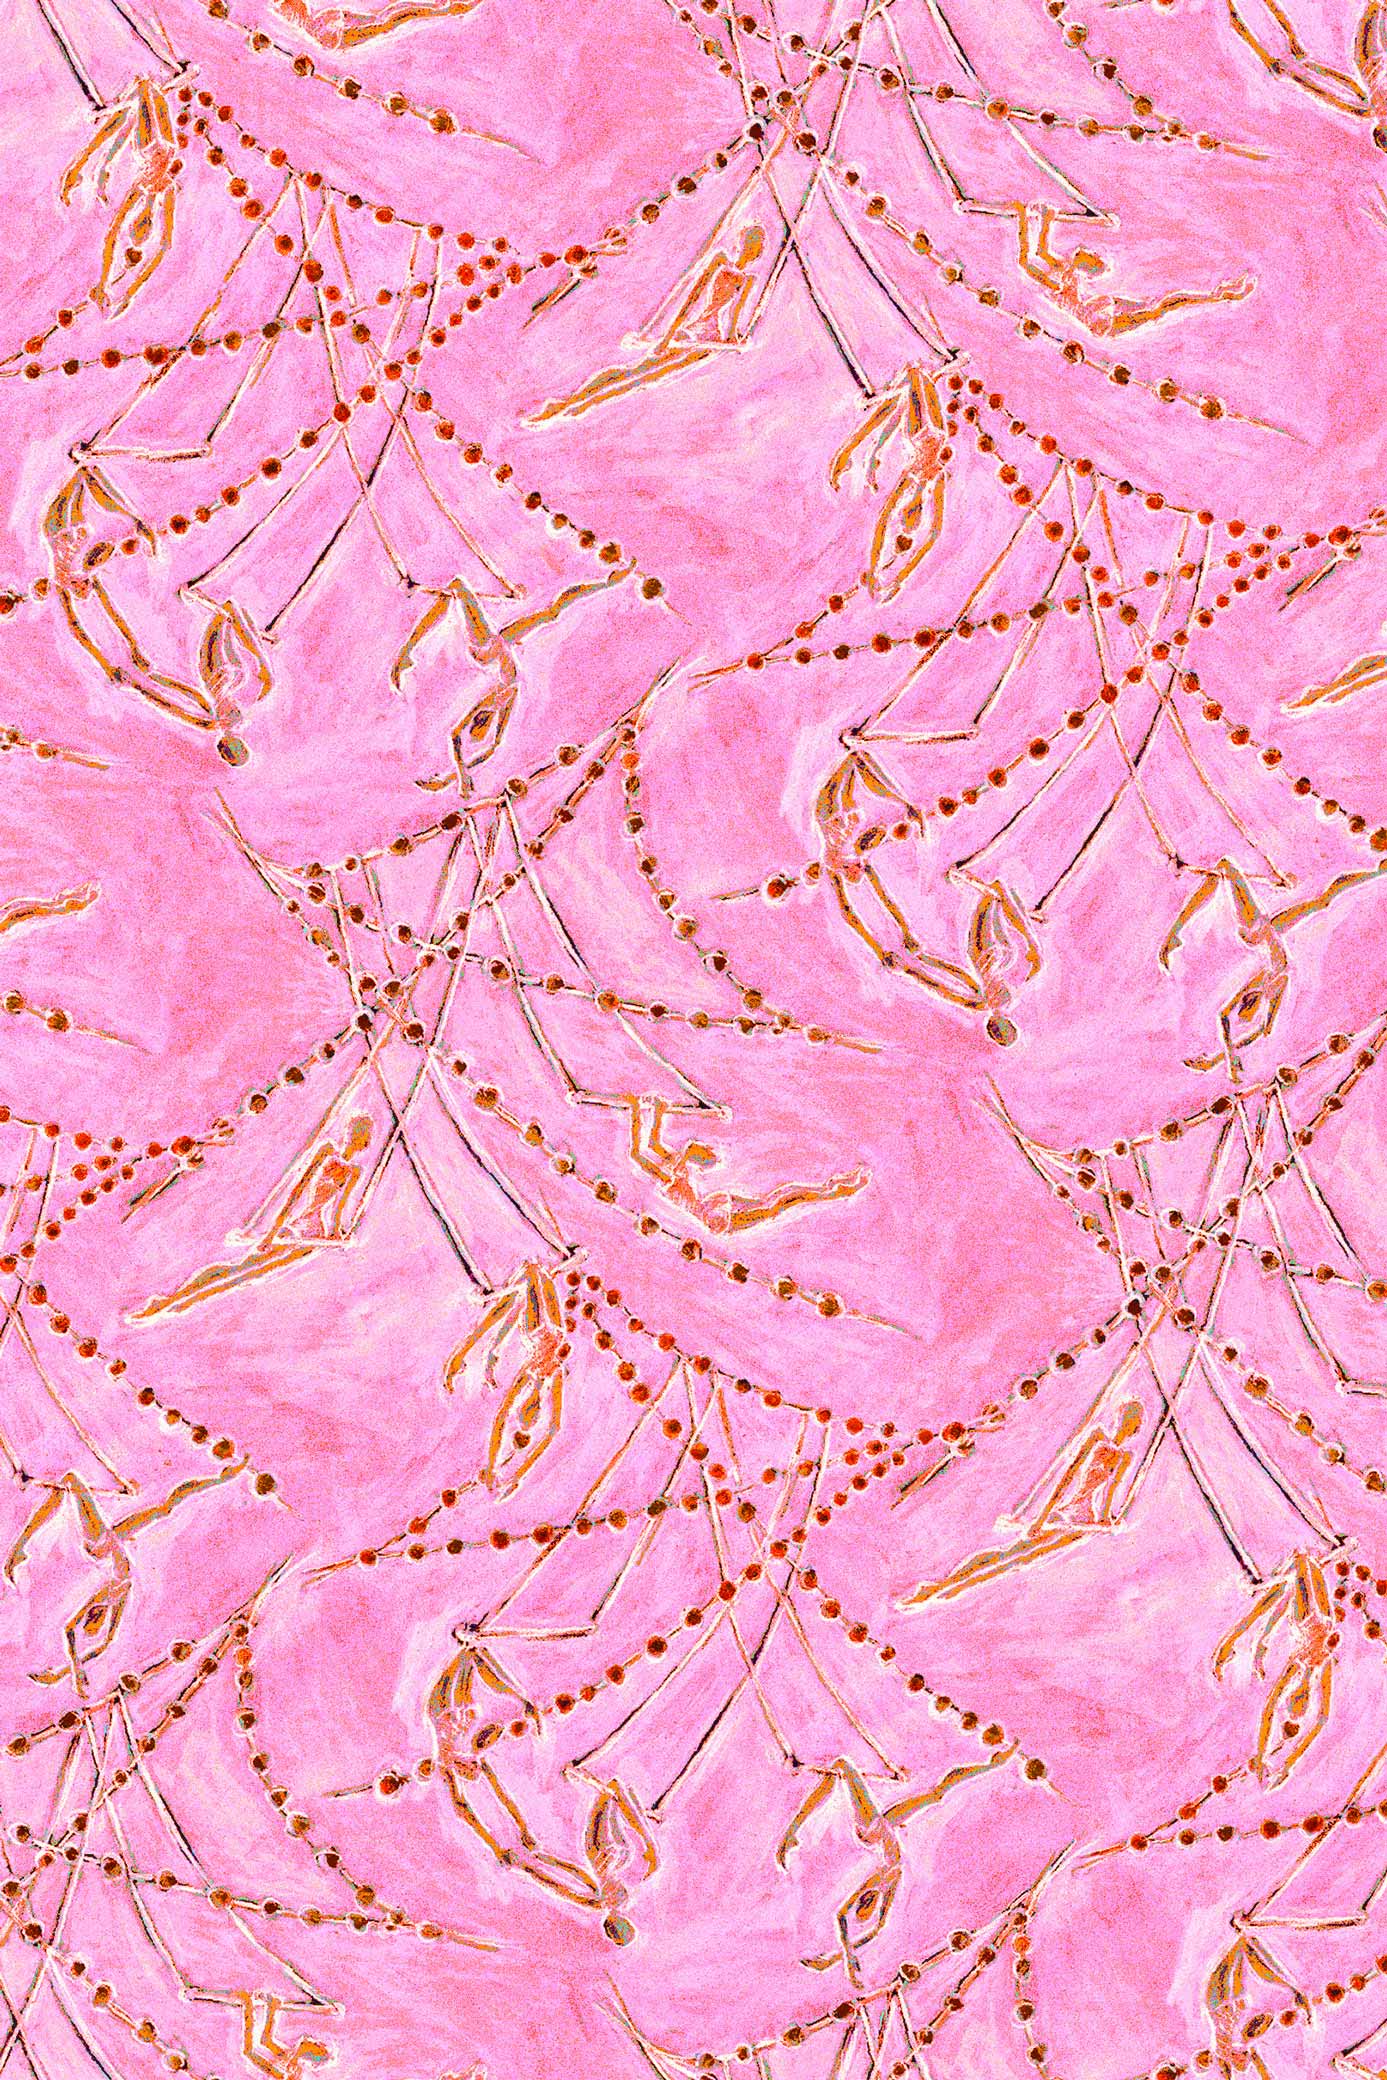 W.E.T. by Ines Schneider Skirt Skirt Ravello / Artist mode hamburg print sommerkleid Unique Prints Summer Dress Handdesignierte Prints Print